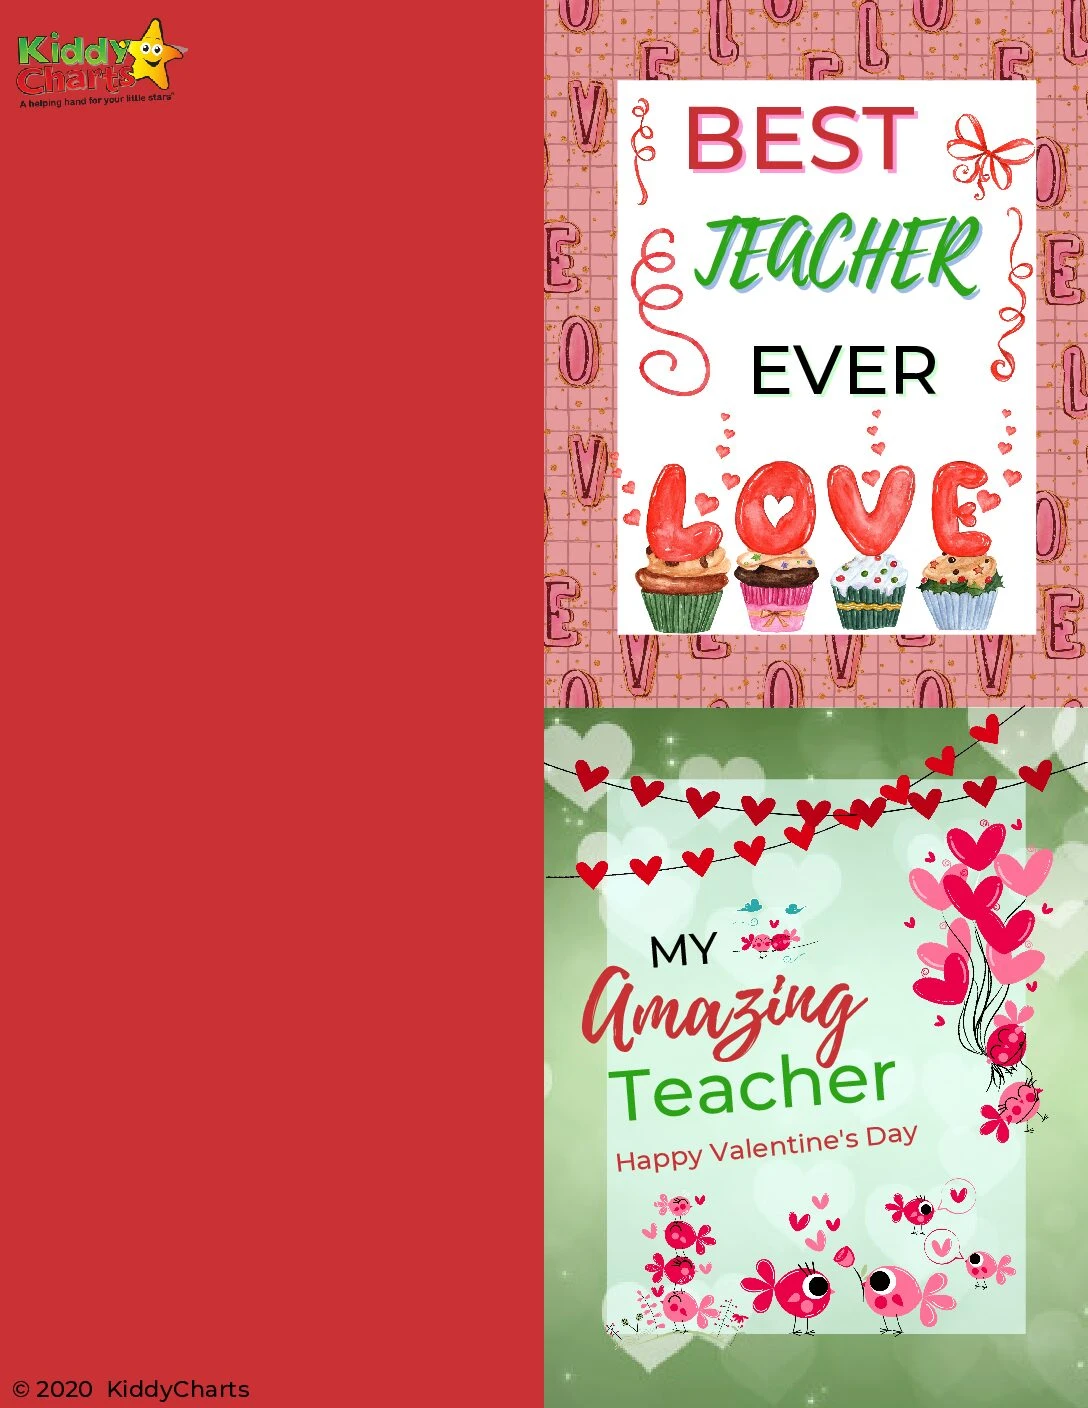 Teacher Valentine's Cards best teacher